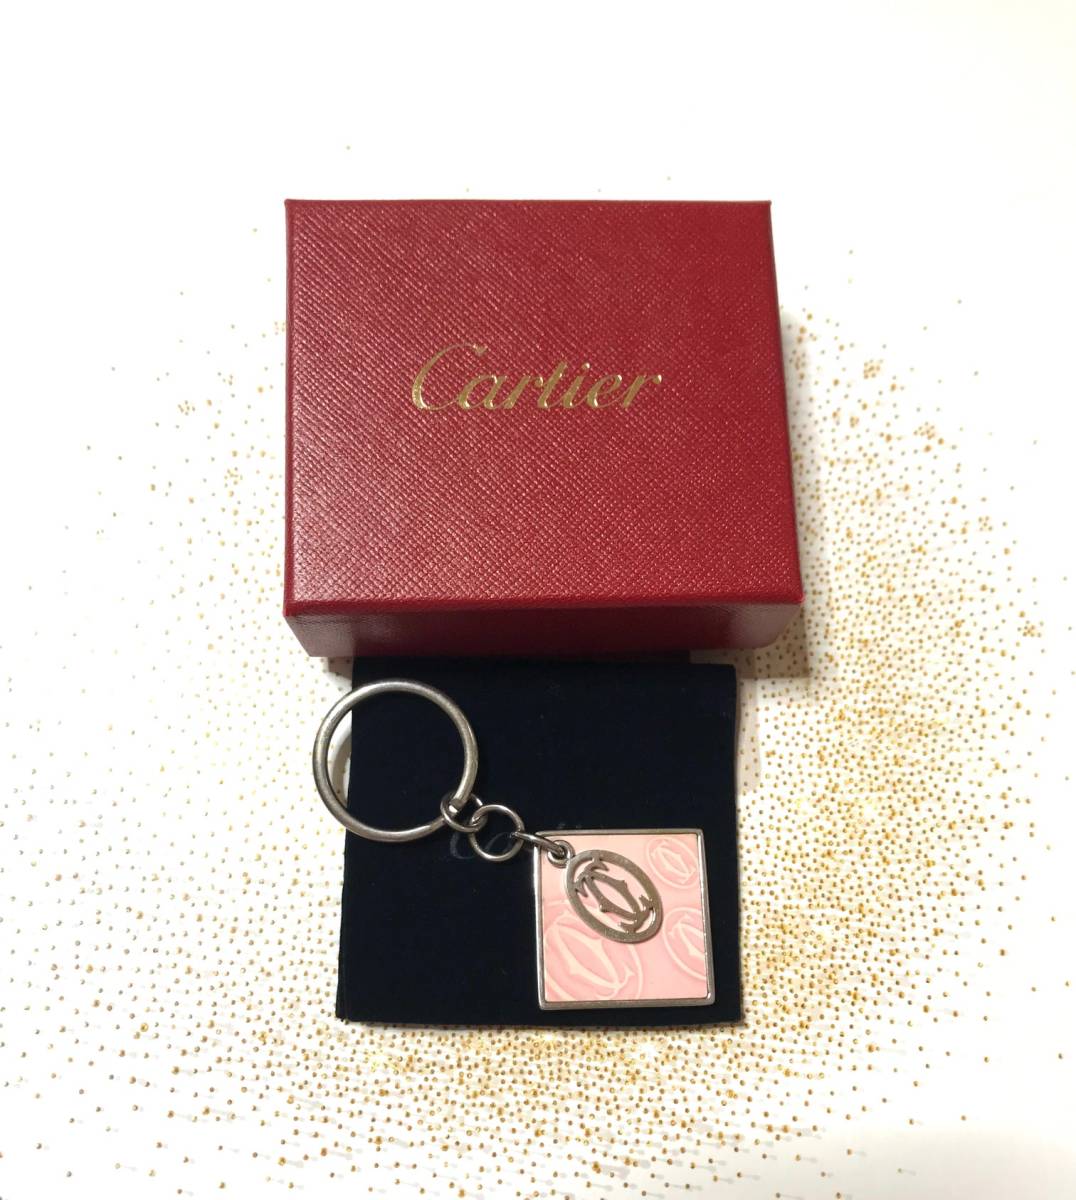  rare |Cartier[ happy birthday ] pink × silver | key ring * key holder | Cartier 